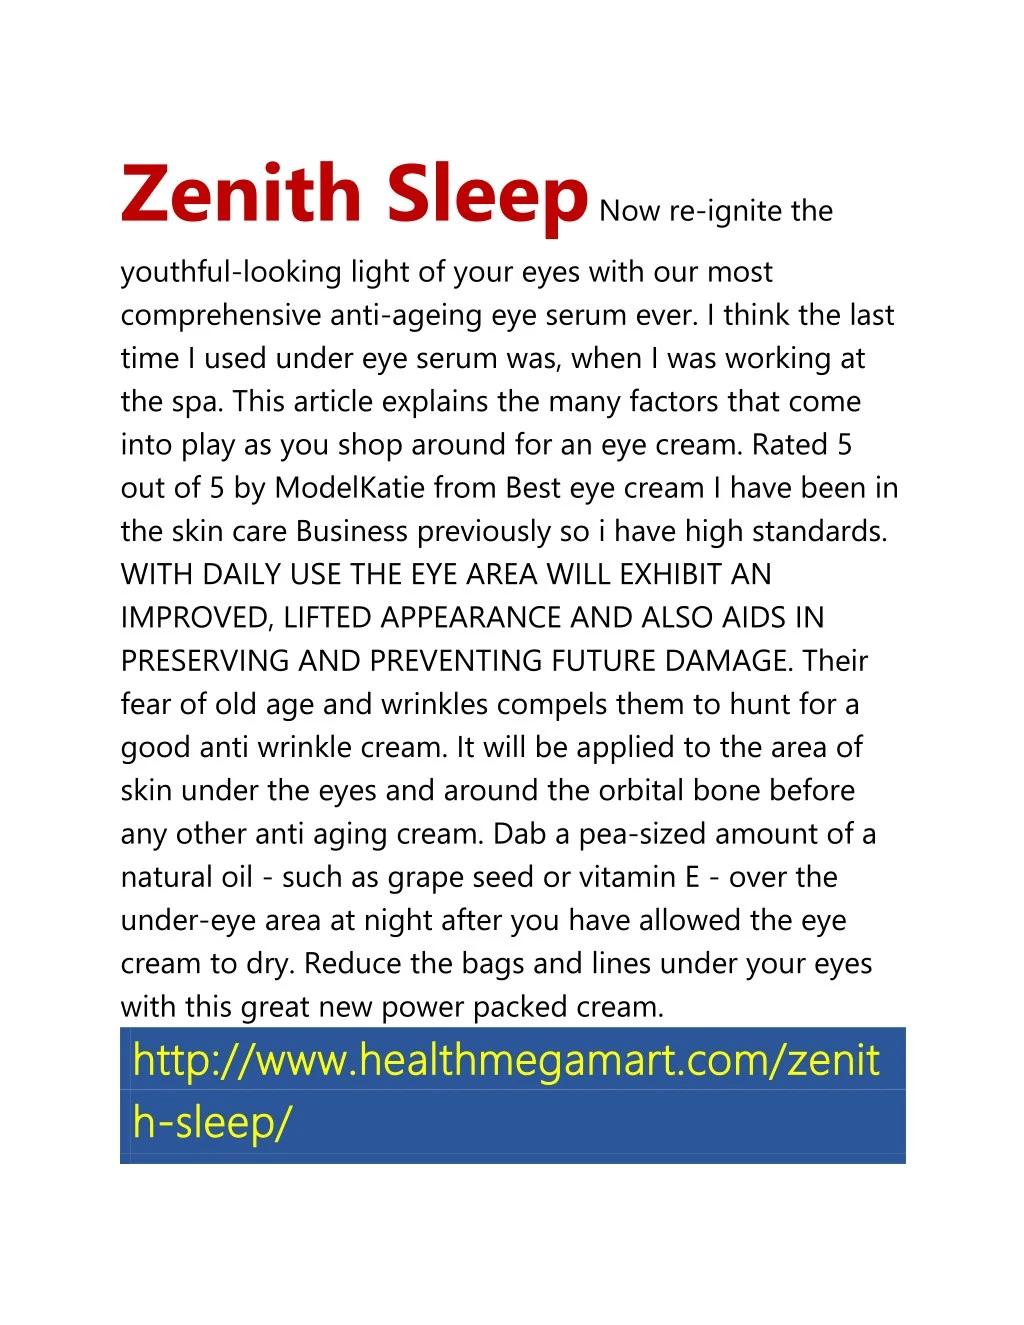 zenith sleep now re ignite the youthful looking